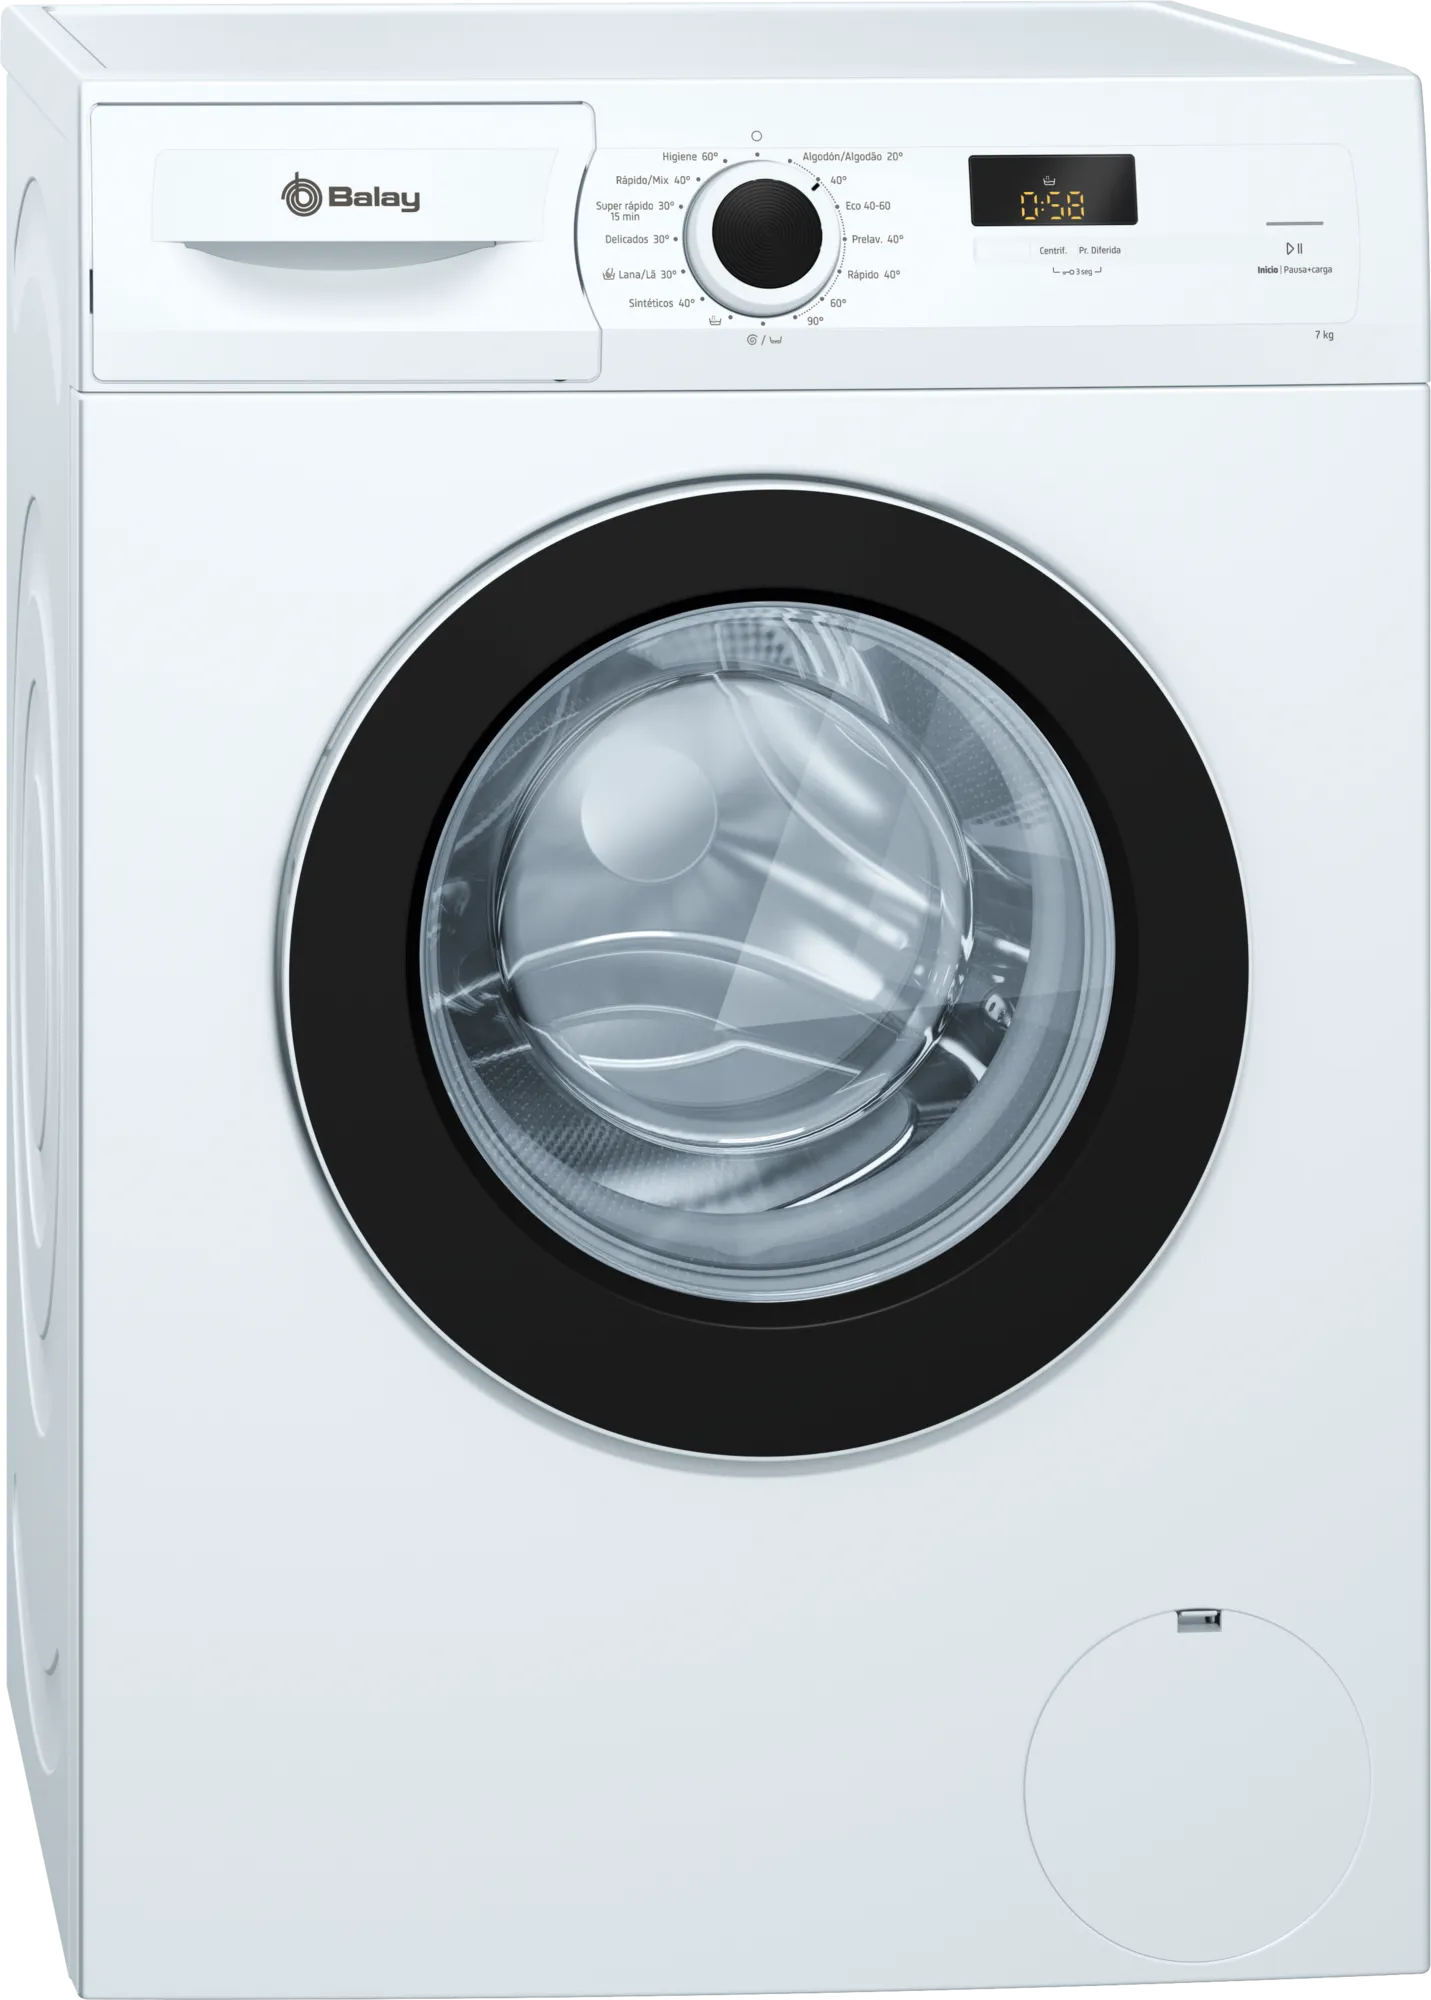 Creación notificación insuficiente Balay 7kg washing machine | eduardsegui